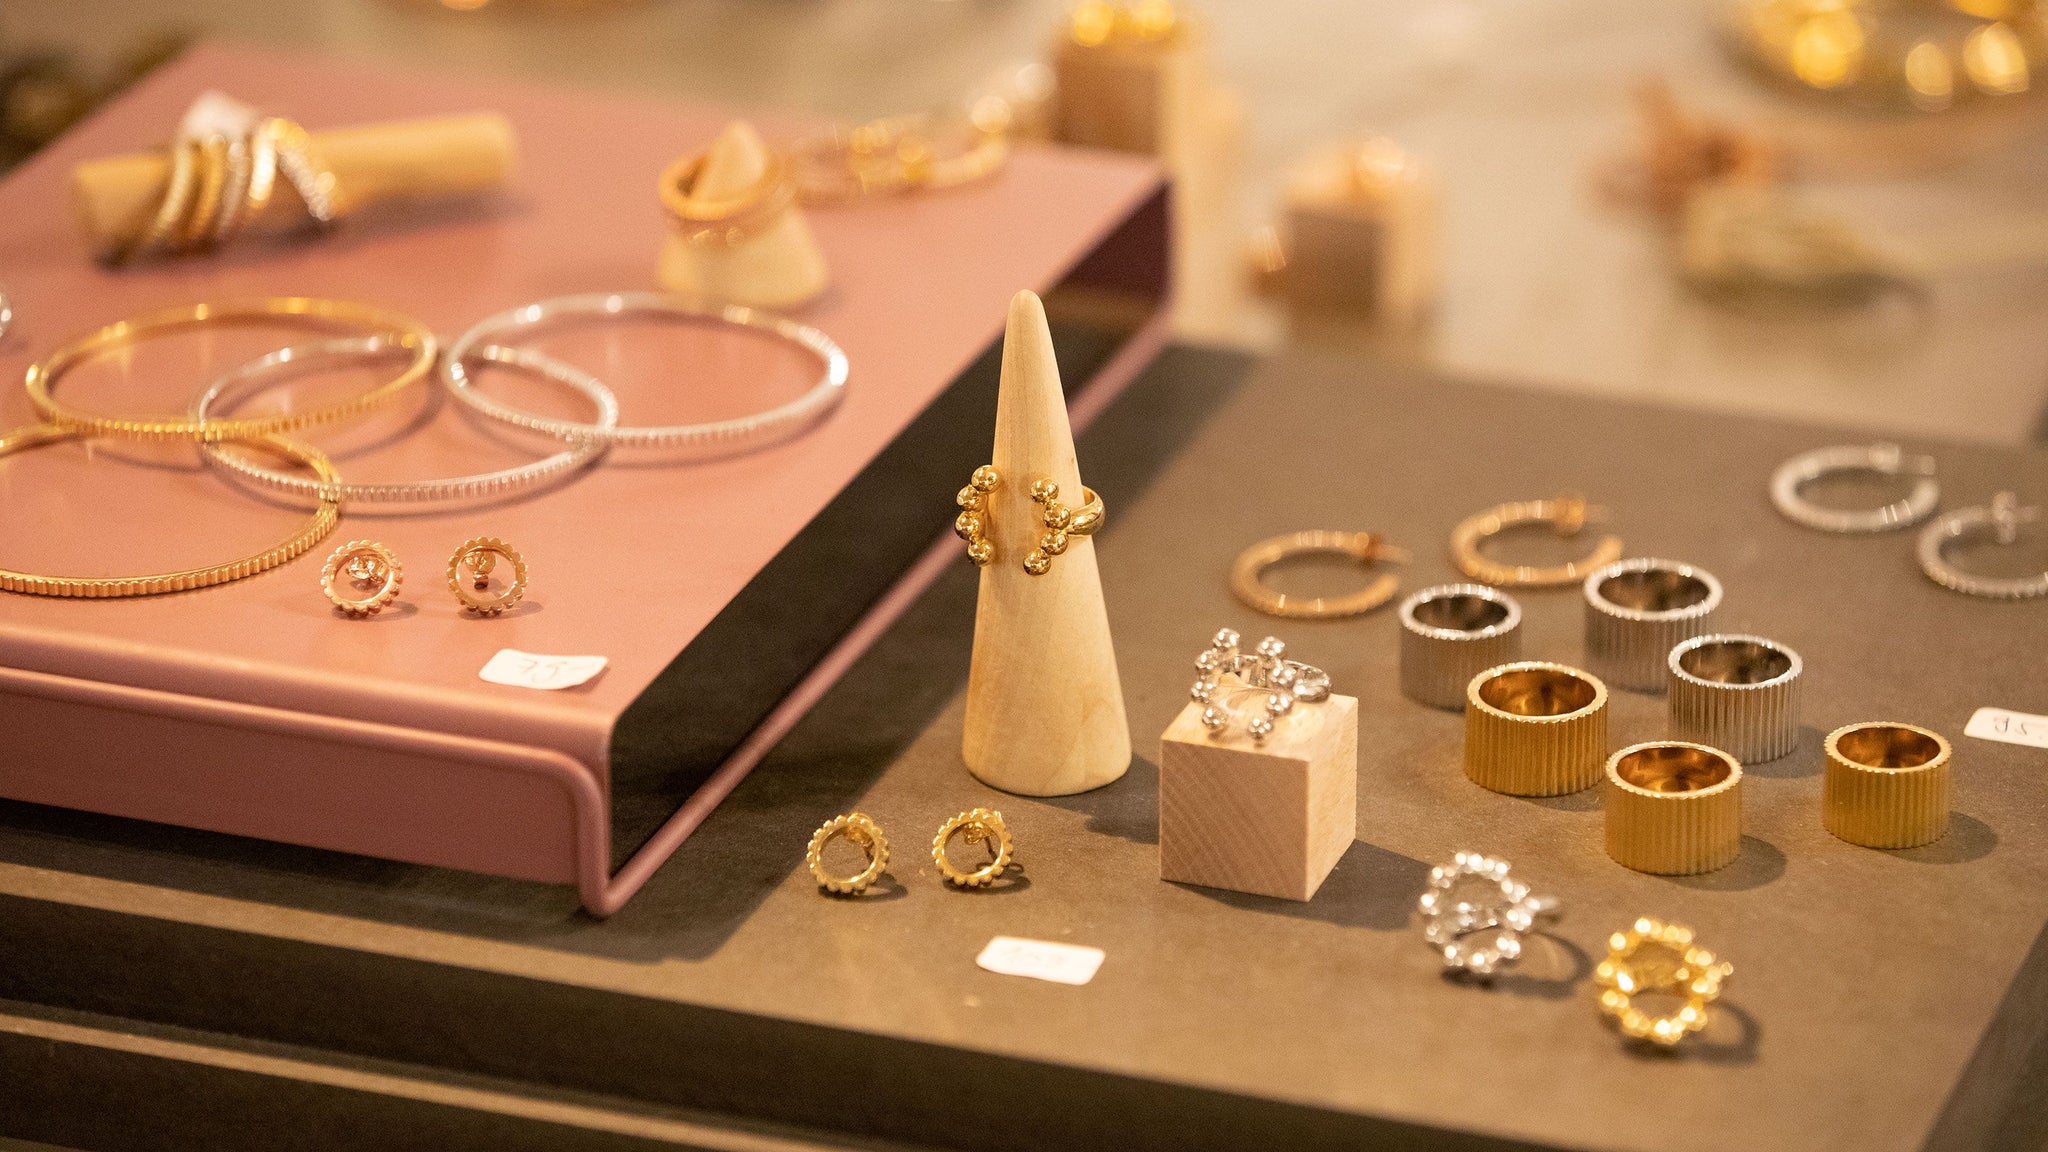 V DESIGN LAB Jewellery featured on hello Zurich & the Next Xmas Markets